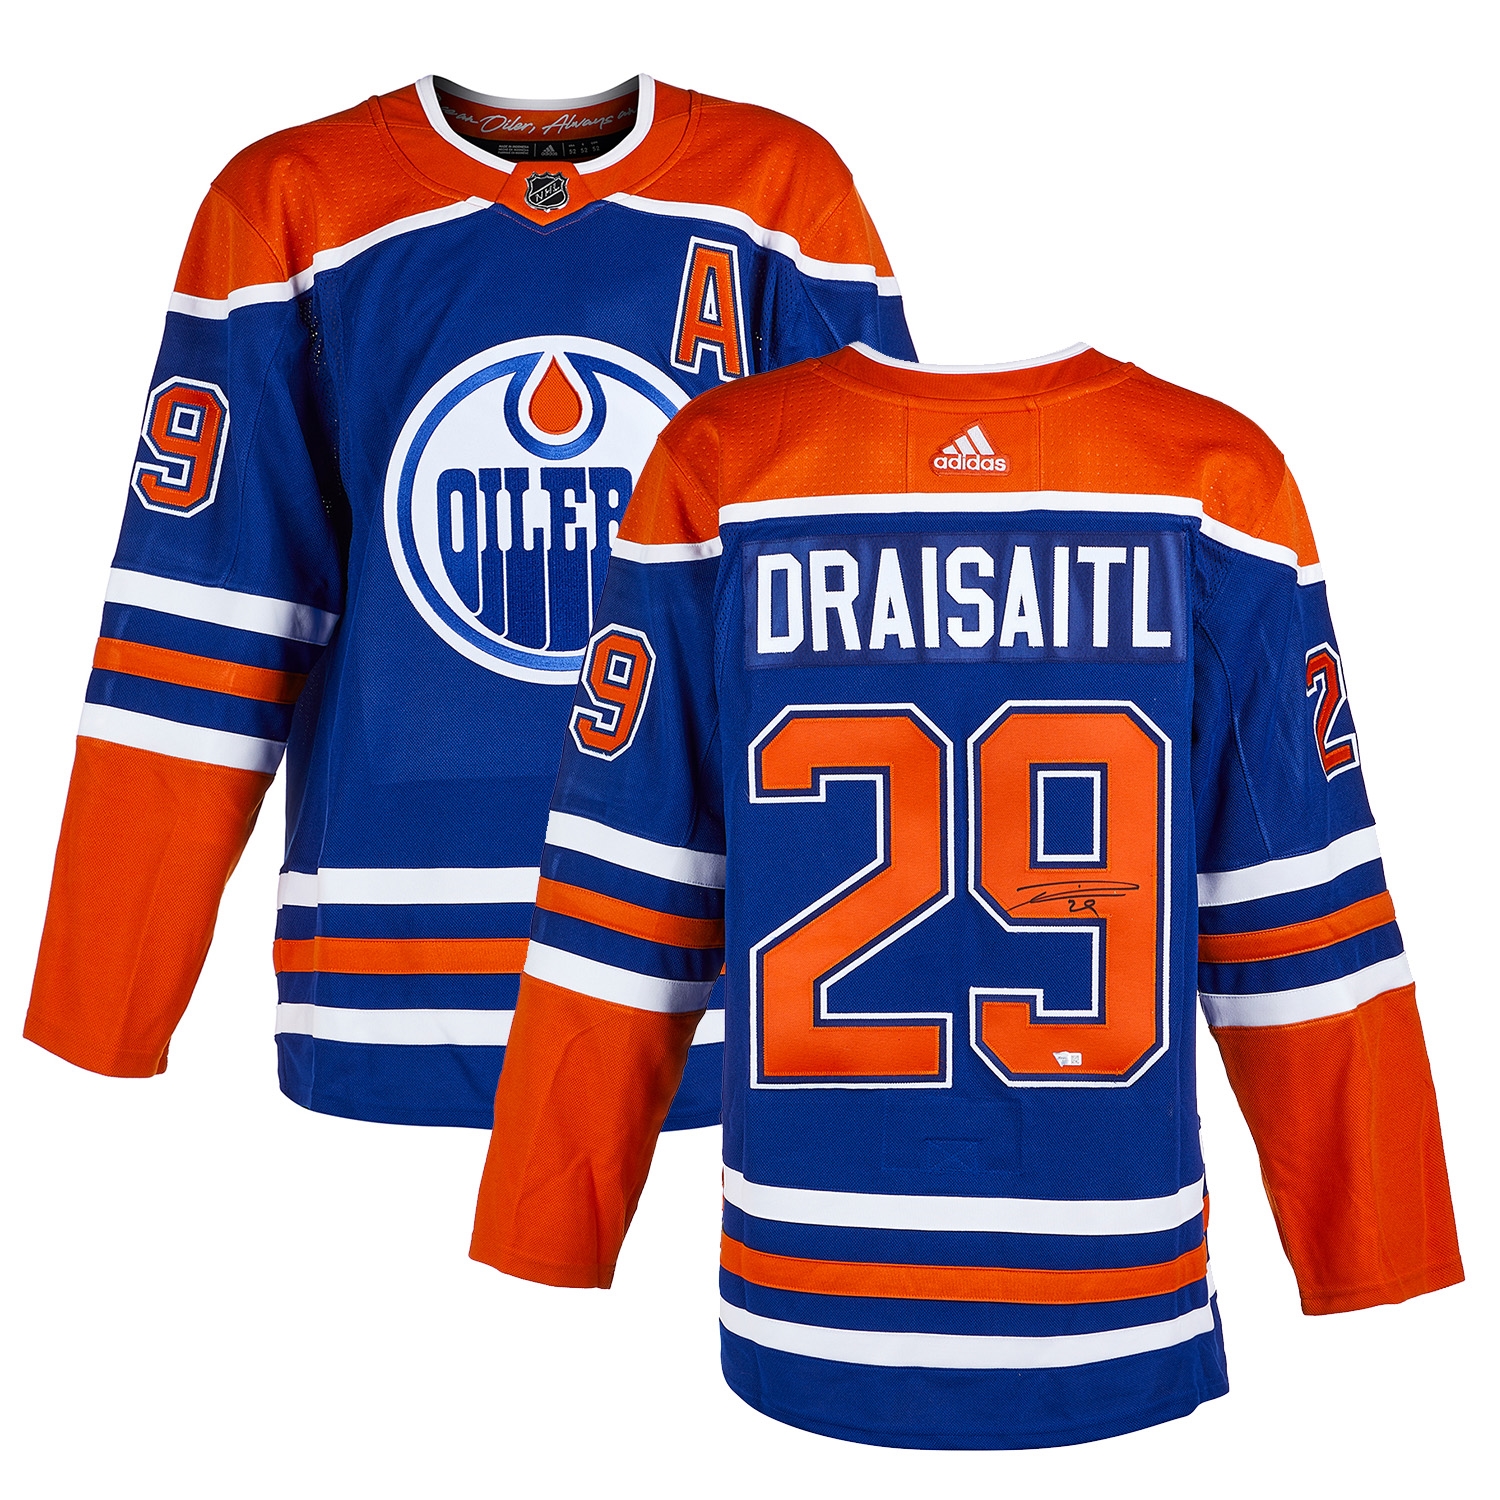 Leon Draisaitl Autographed Edmonton Oilers Adidas Jersey